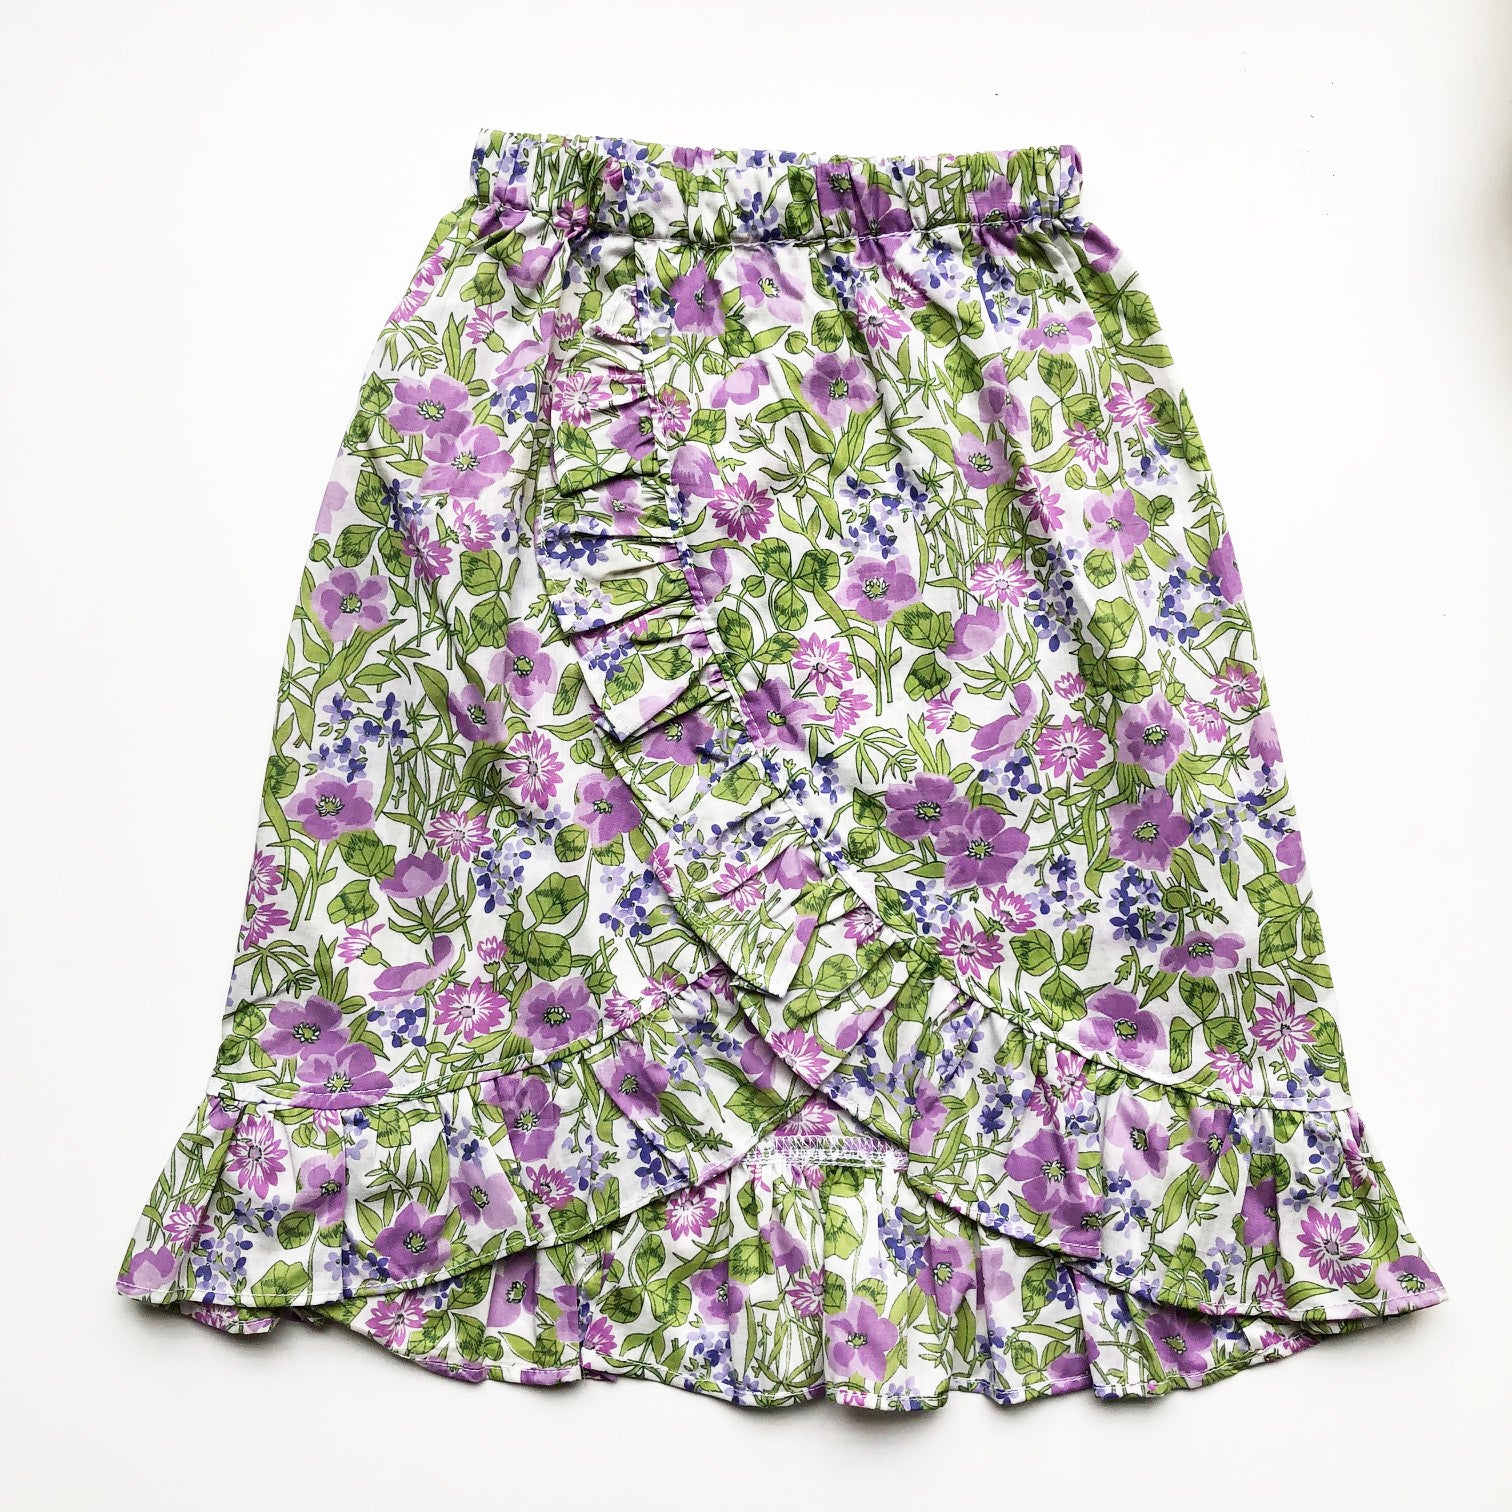 Sara Re-imagined Ruffle Skirt In Lilac Liberty print size 2